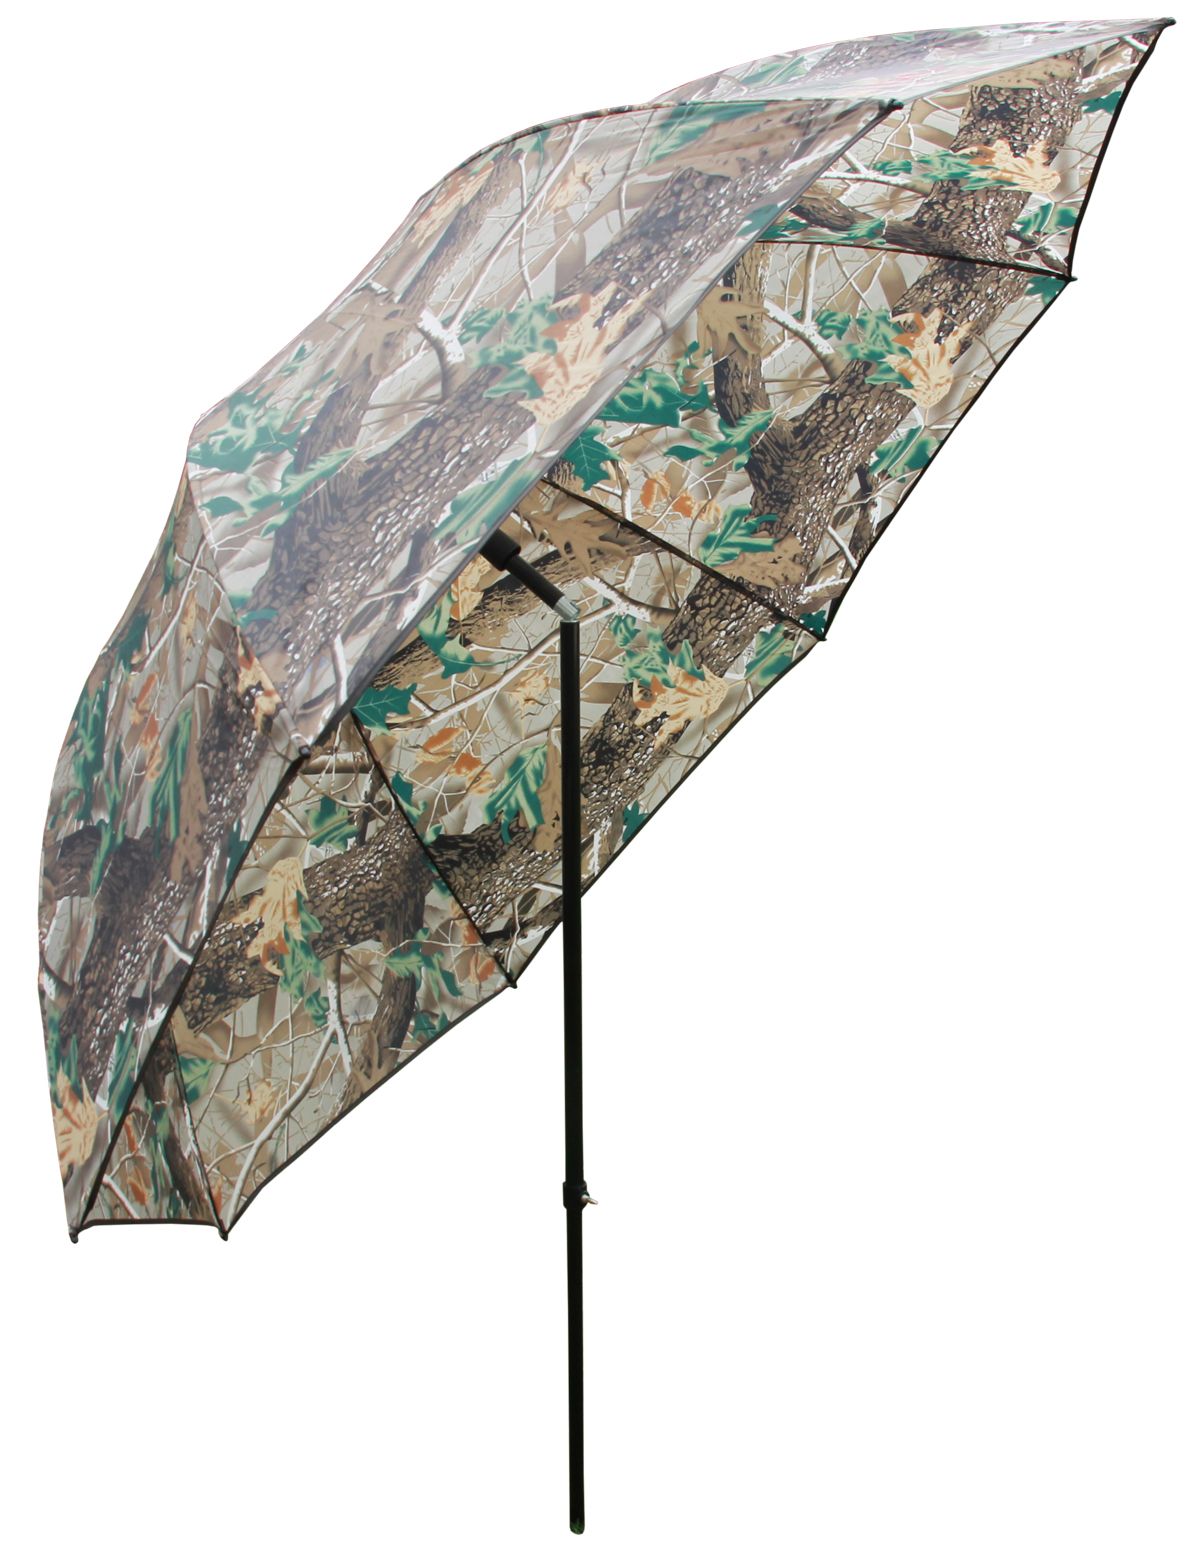 Ultimate Umbrella Camo mit Kippfunktion